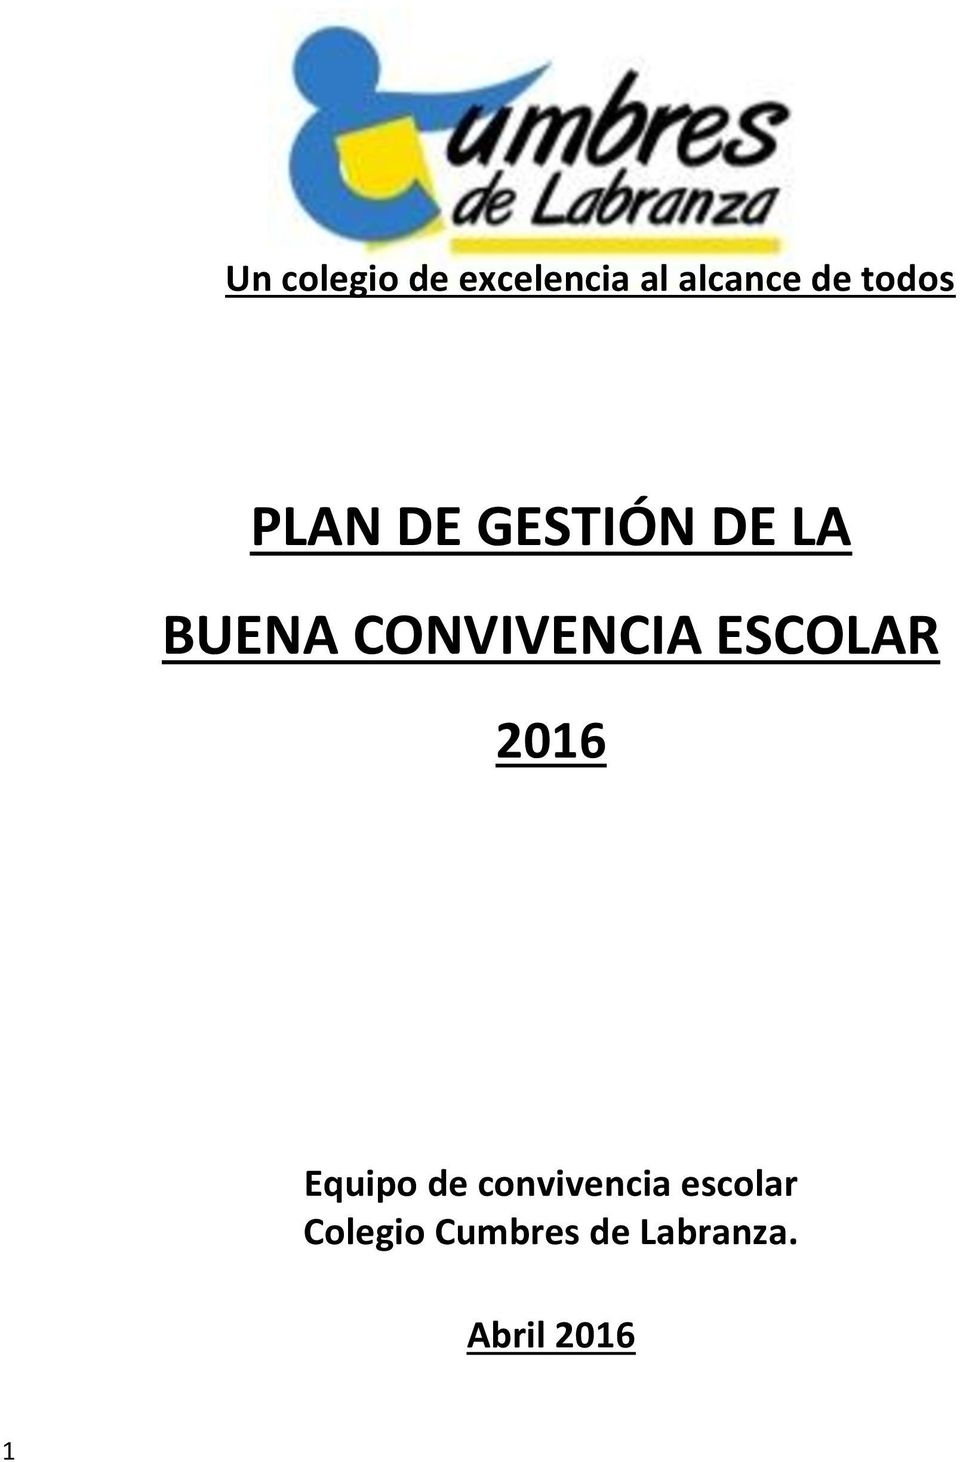 CONVIVENCIA ESCOLAR 2016 Equipo de